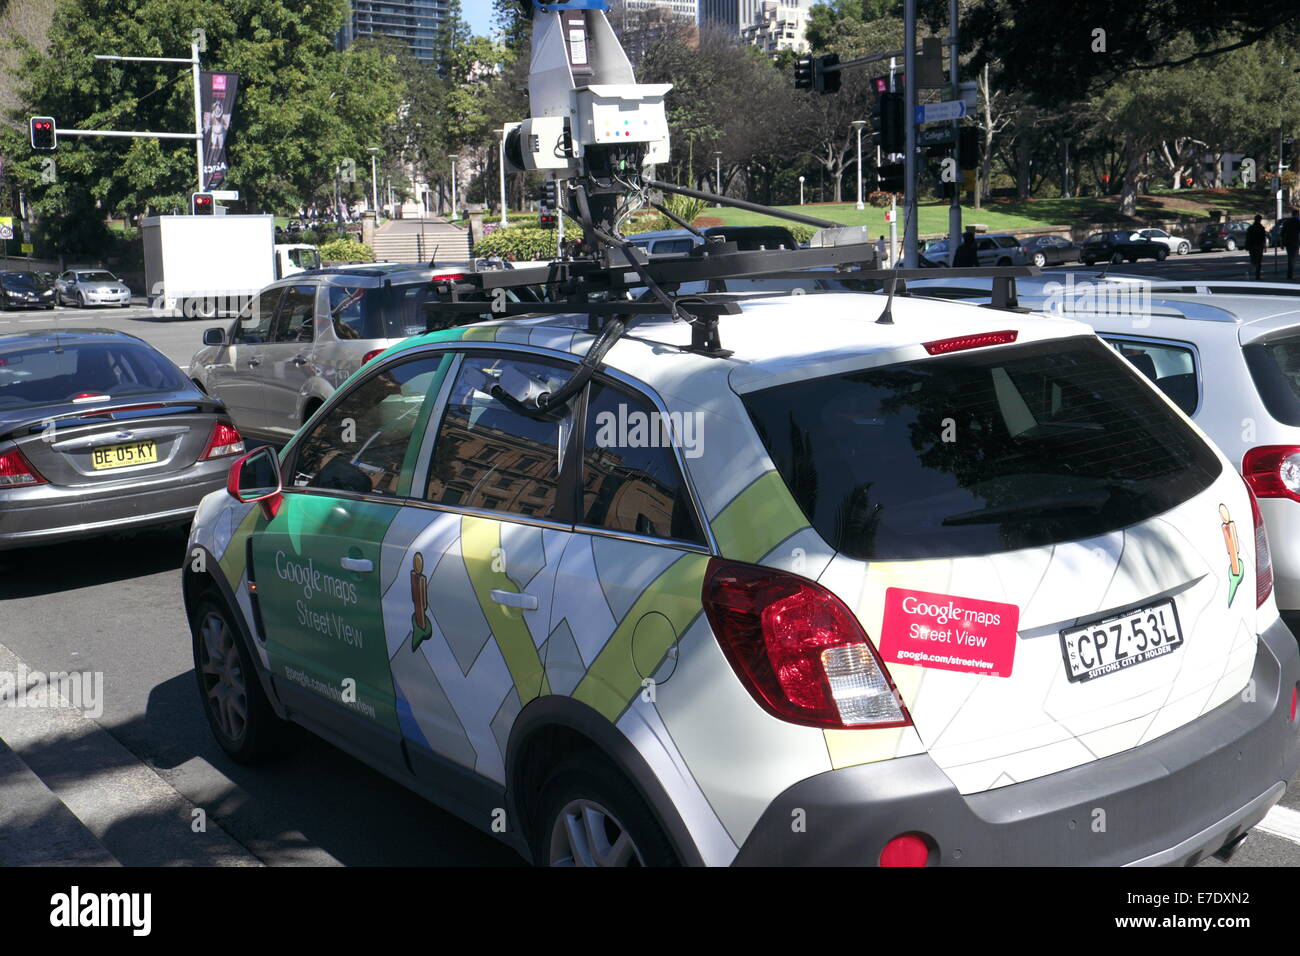 Google maps survey vehicle in college street, Sydney,new south wales,australia Stock Photo